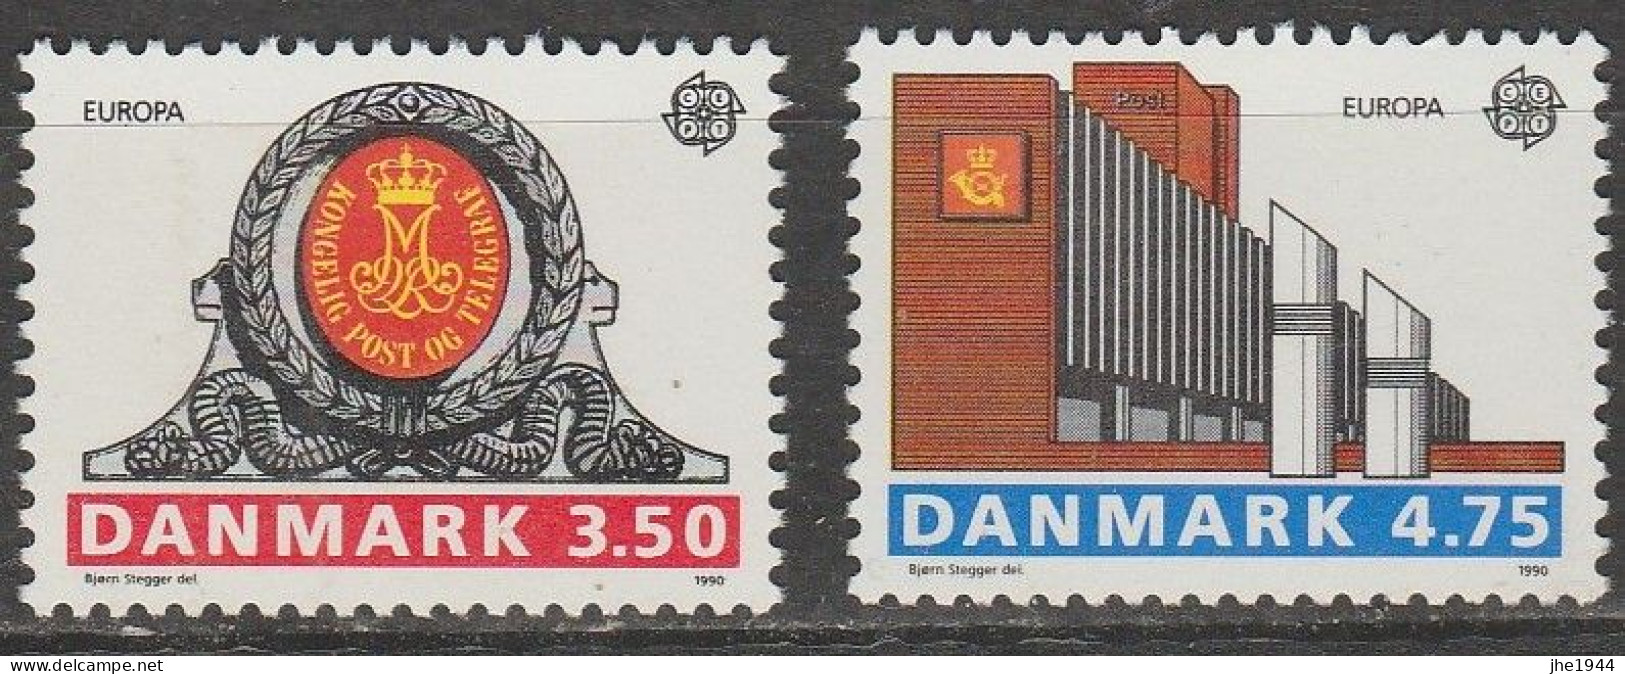 Danemark Europa 1990 N° 078/ 979 Ets Postaux - 1990